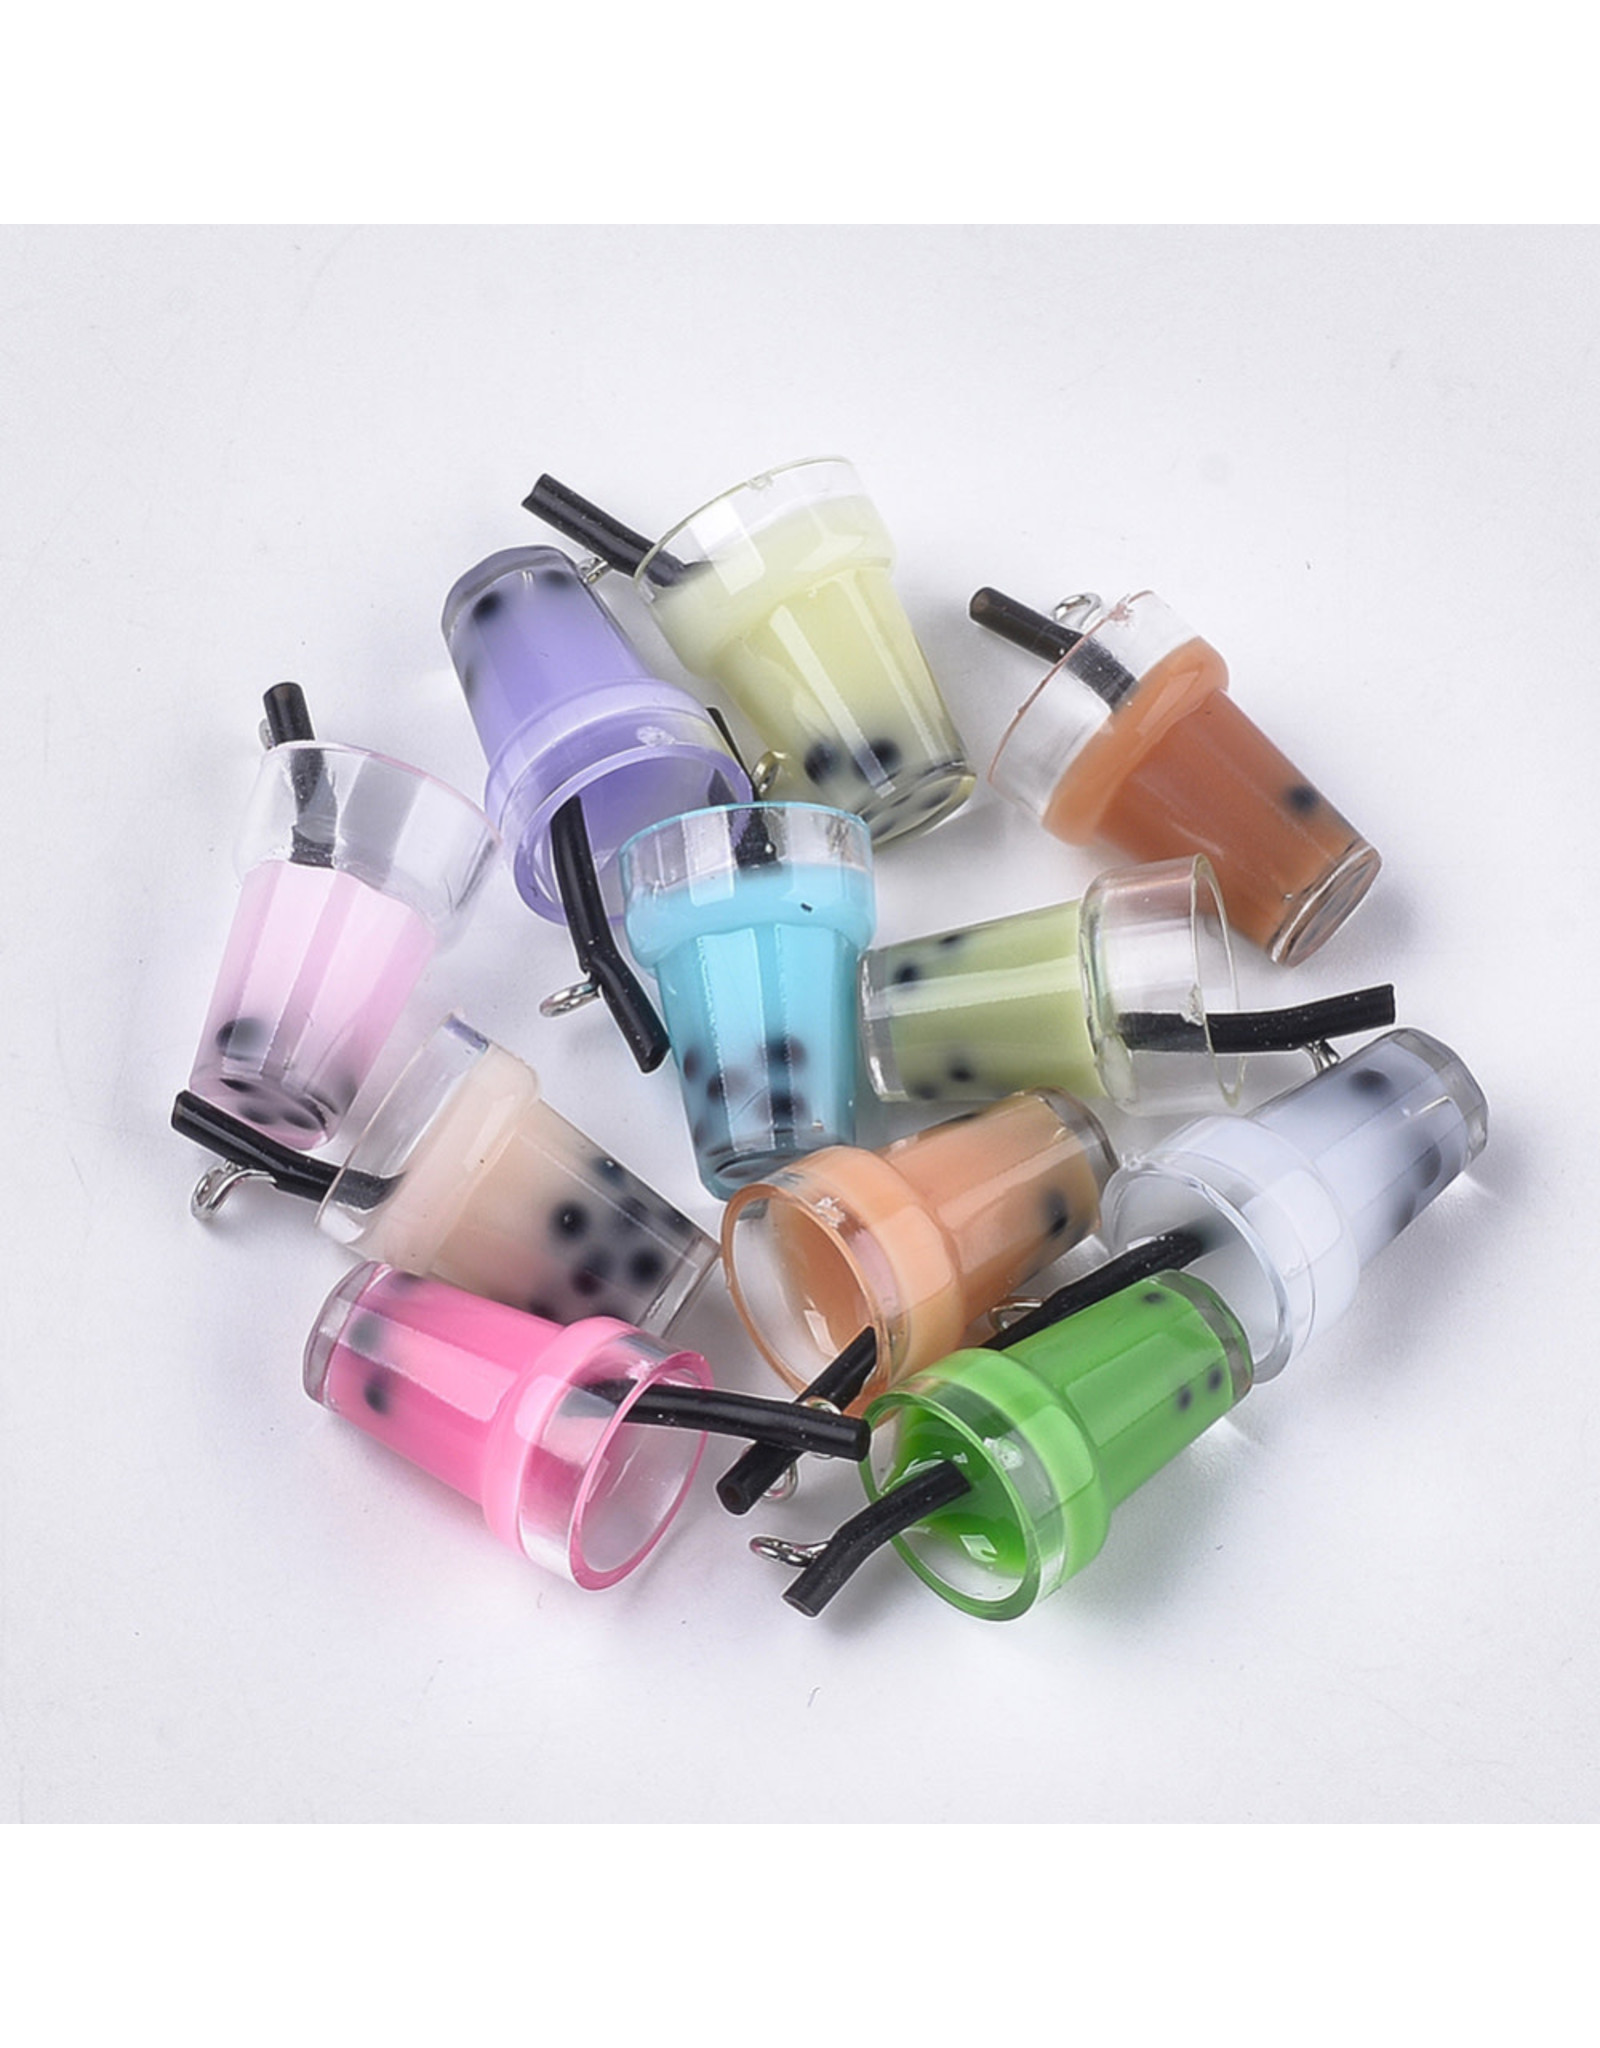 Bubble Tea  Plastic Assorted Colours  23x13x13mm  x3  Pairs